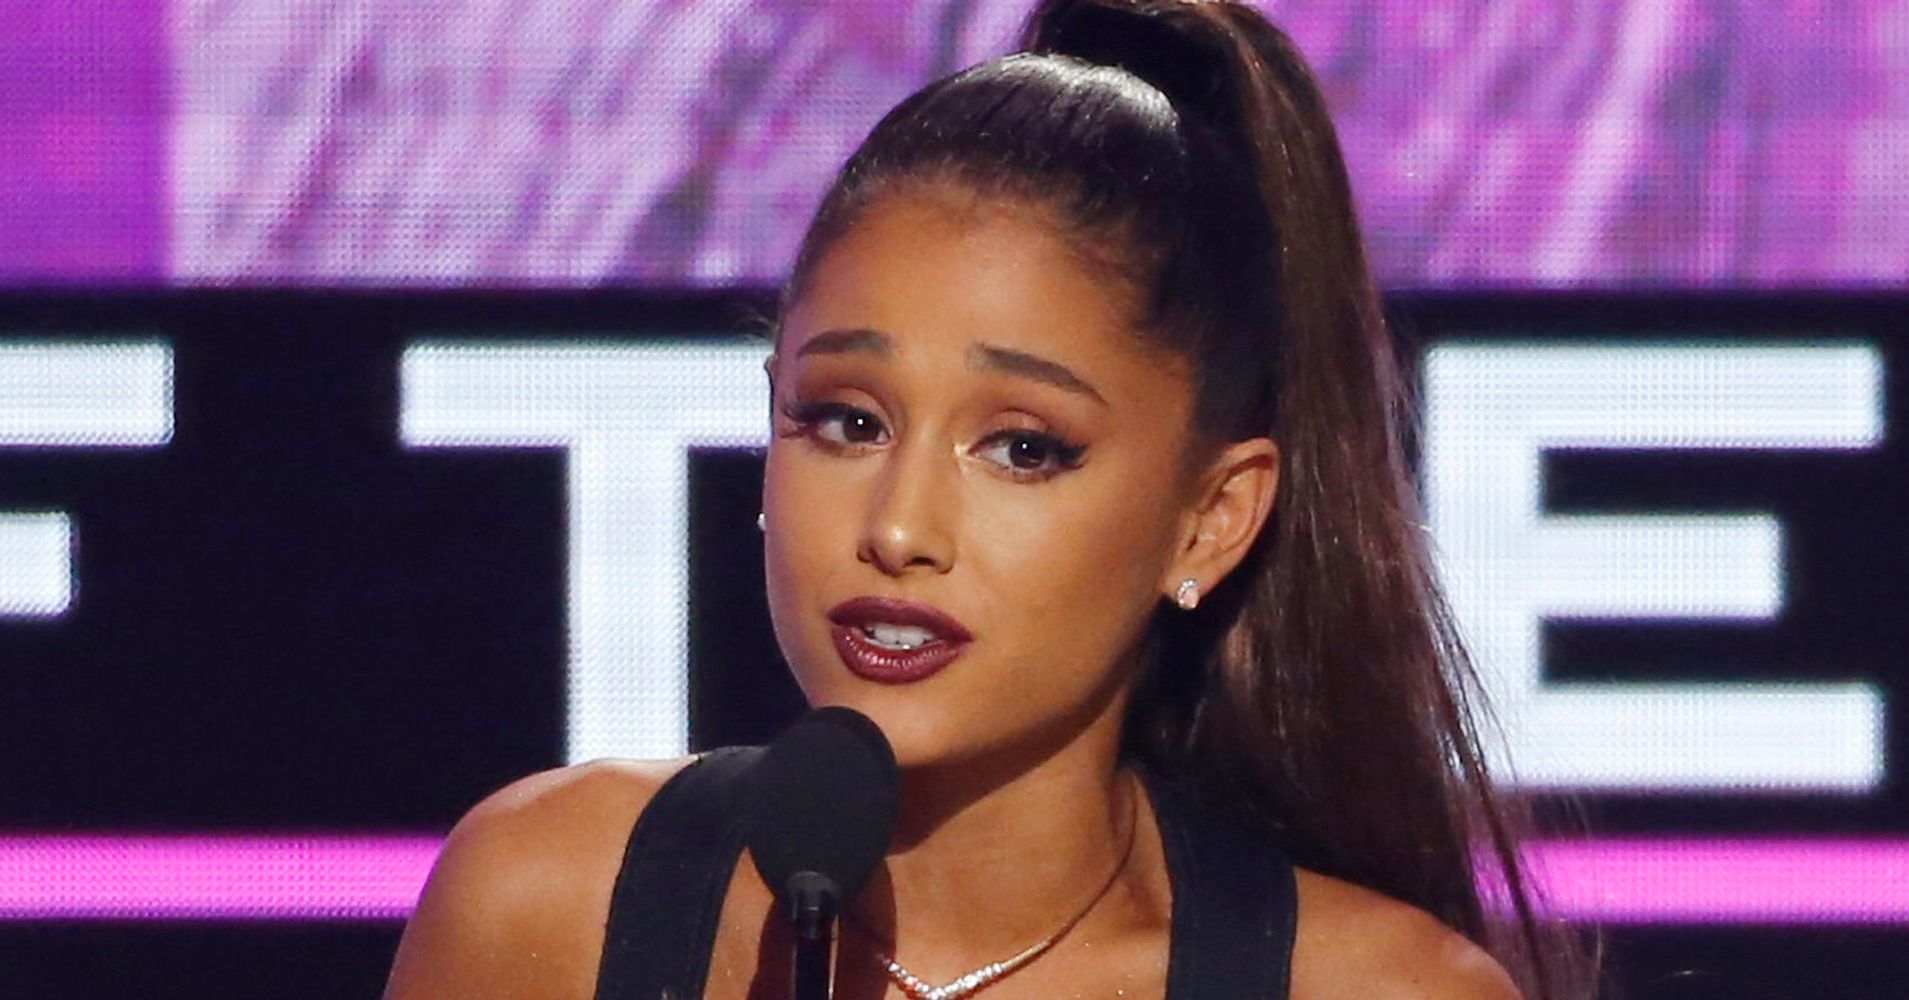 Ariana Grande On British Concert Horror: 'Broken.' | HuffPost